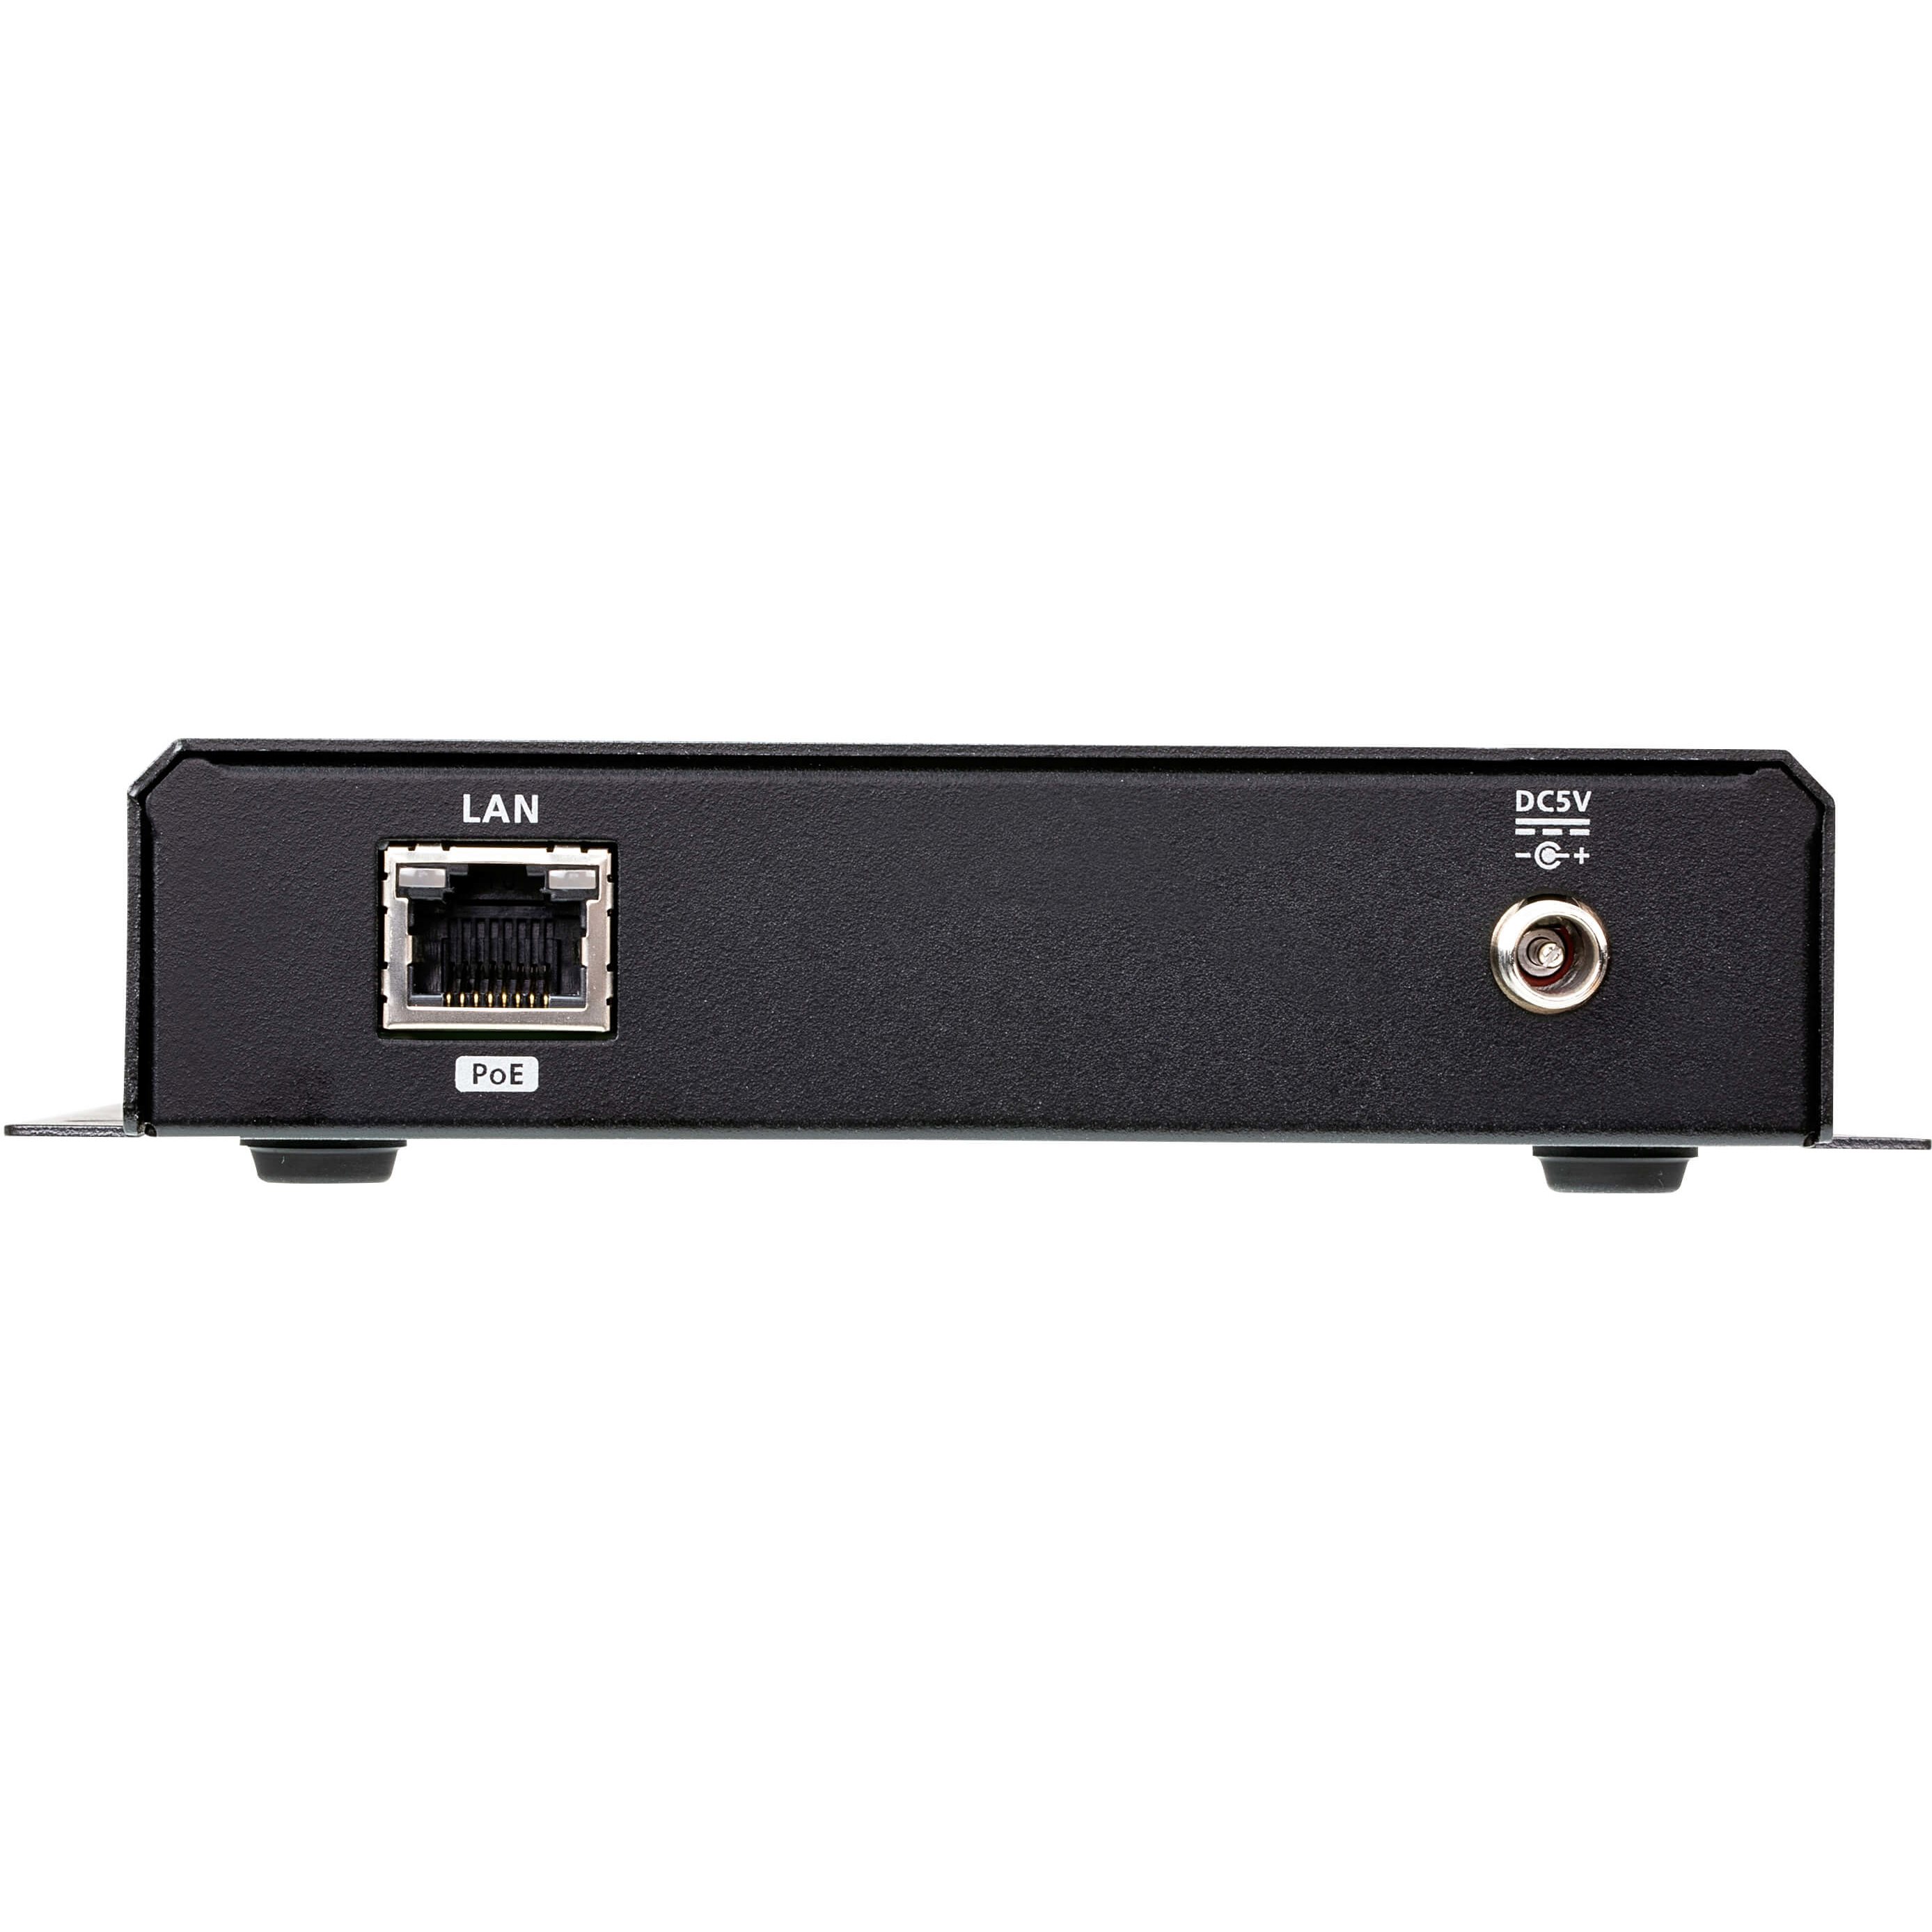   Dport vido over IP   Transmetteur HDMI 4K sur IP POE VE8952T-AT-G